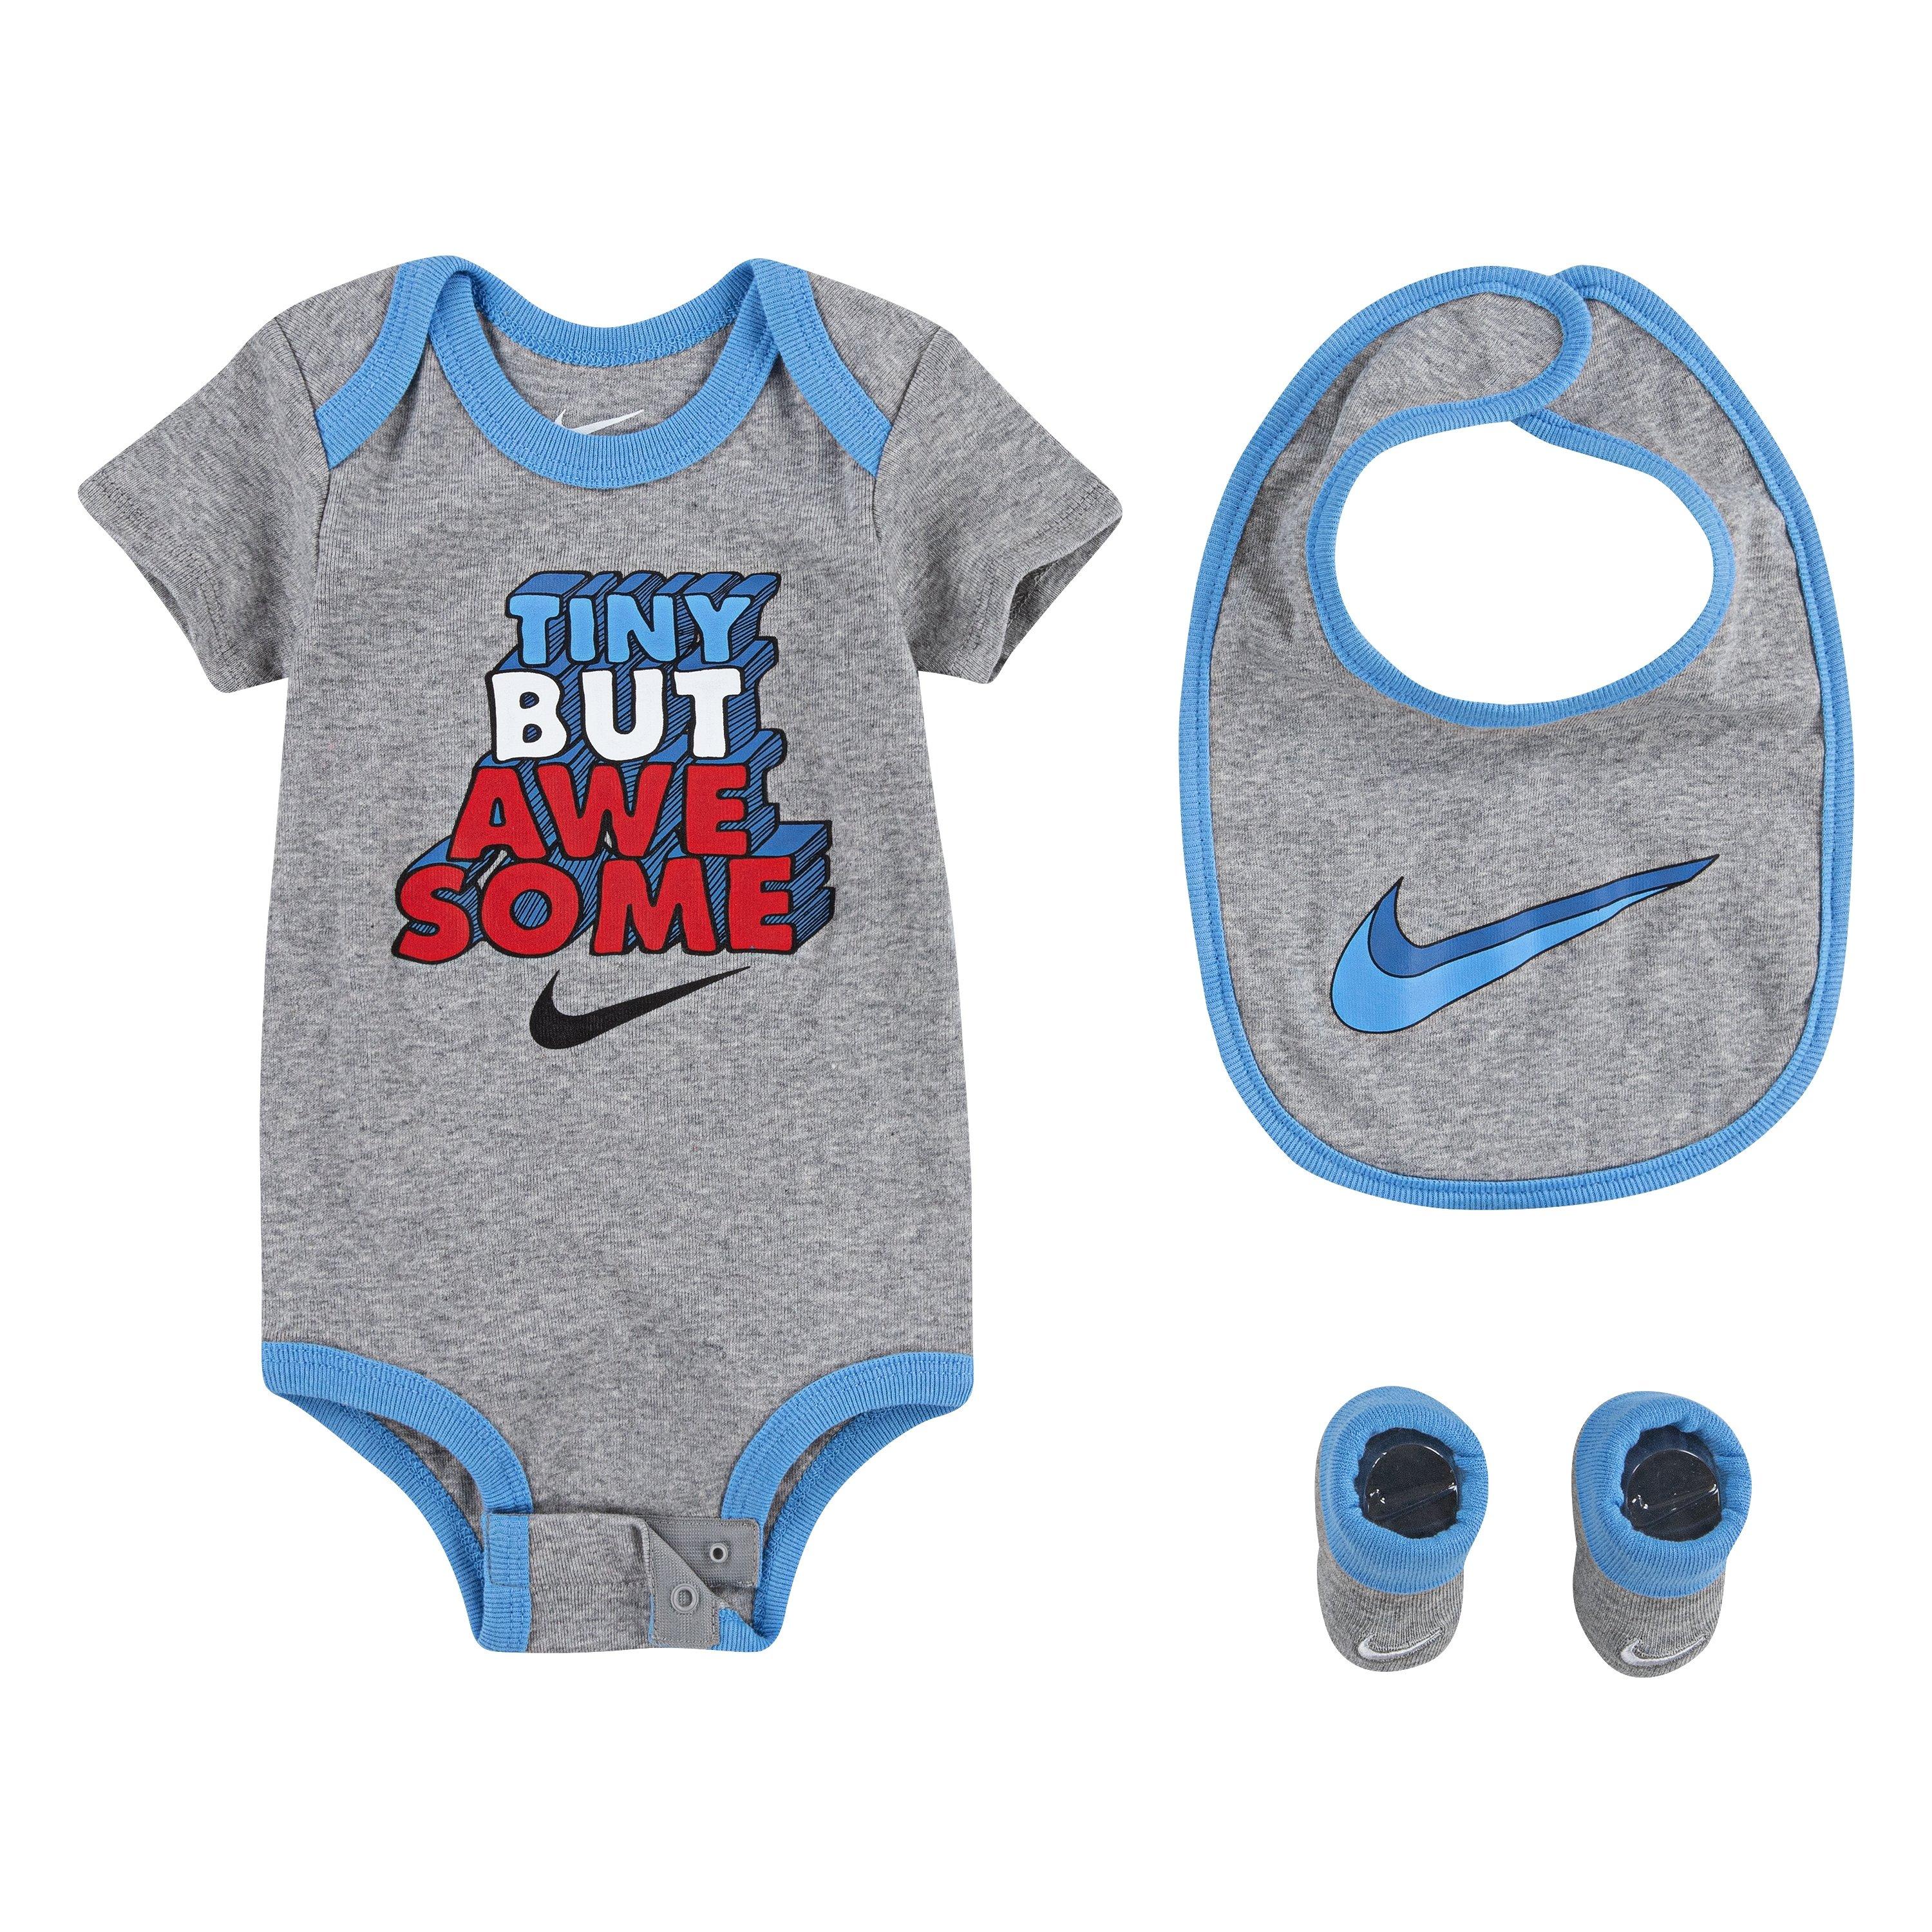 nike infant boy clothes